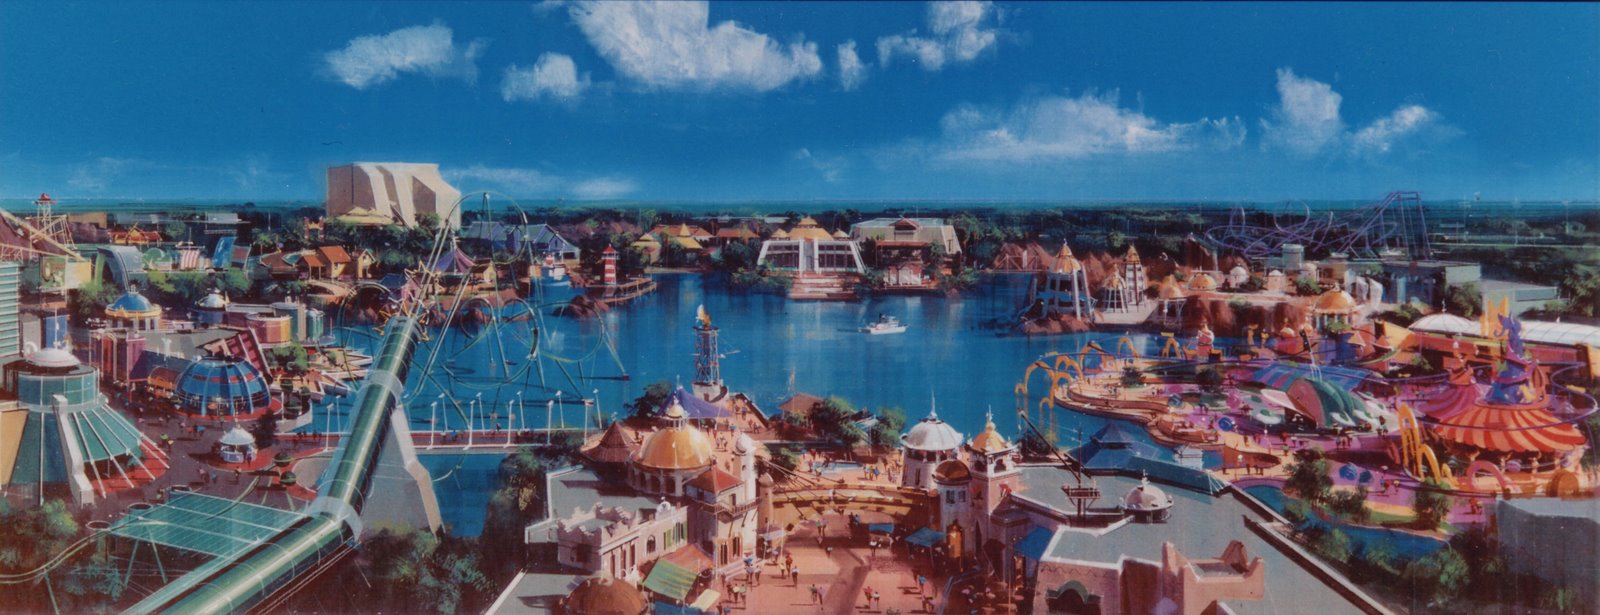 Islands of Adventure Fact Sheet - Universal Orlando Resort Media Site